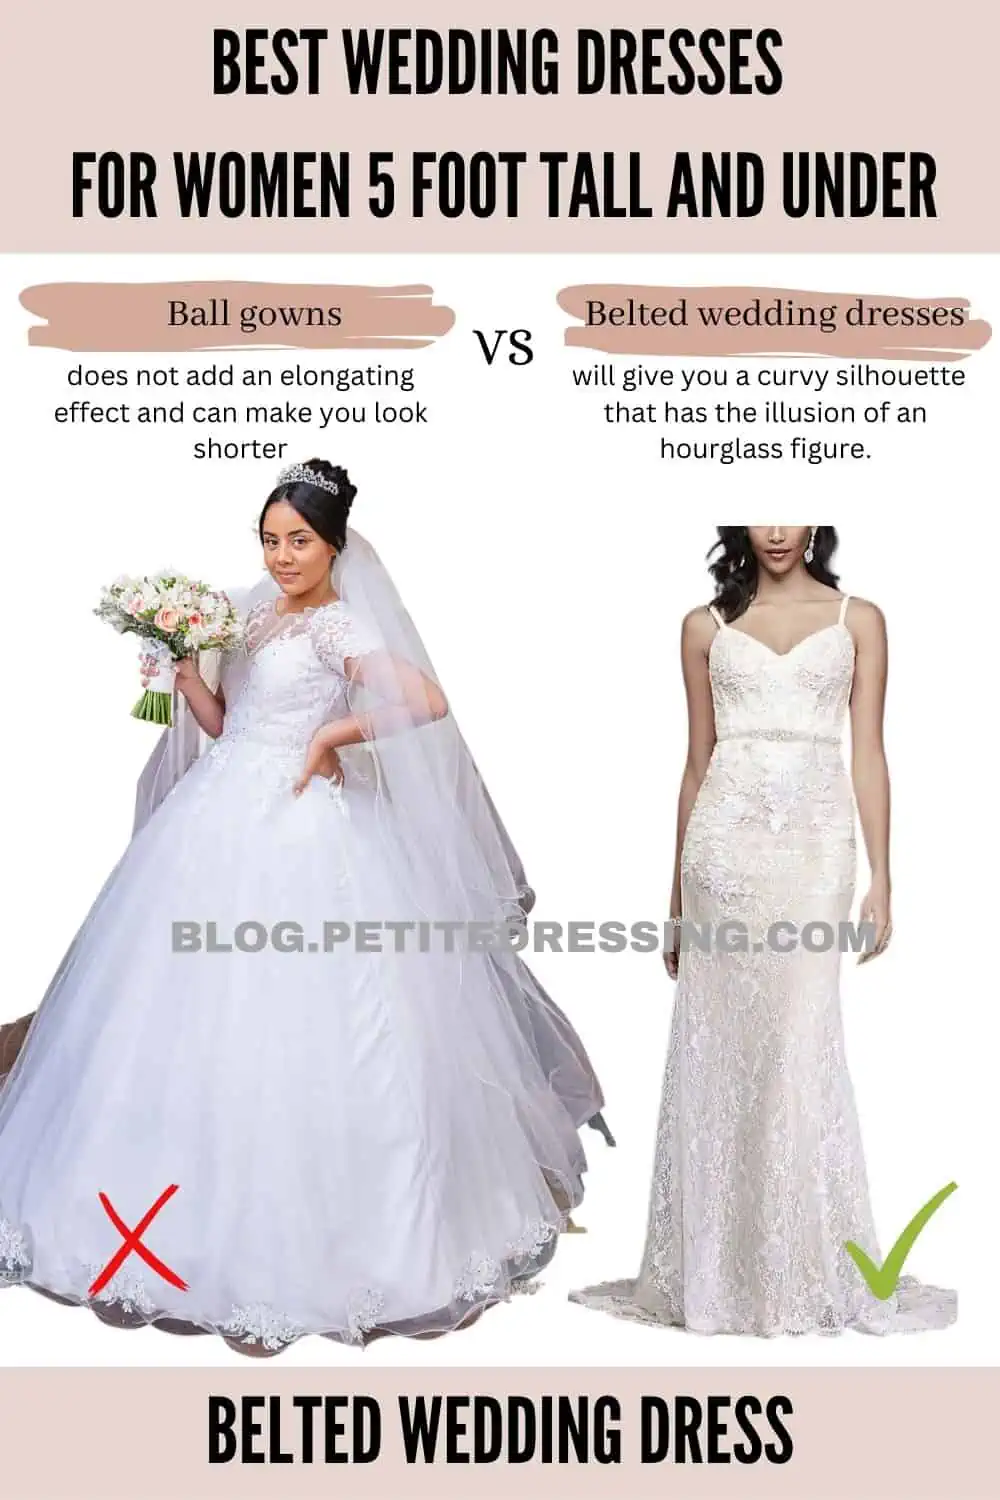 Belted wedding dress